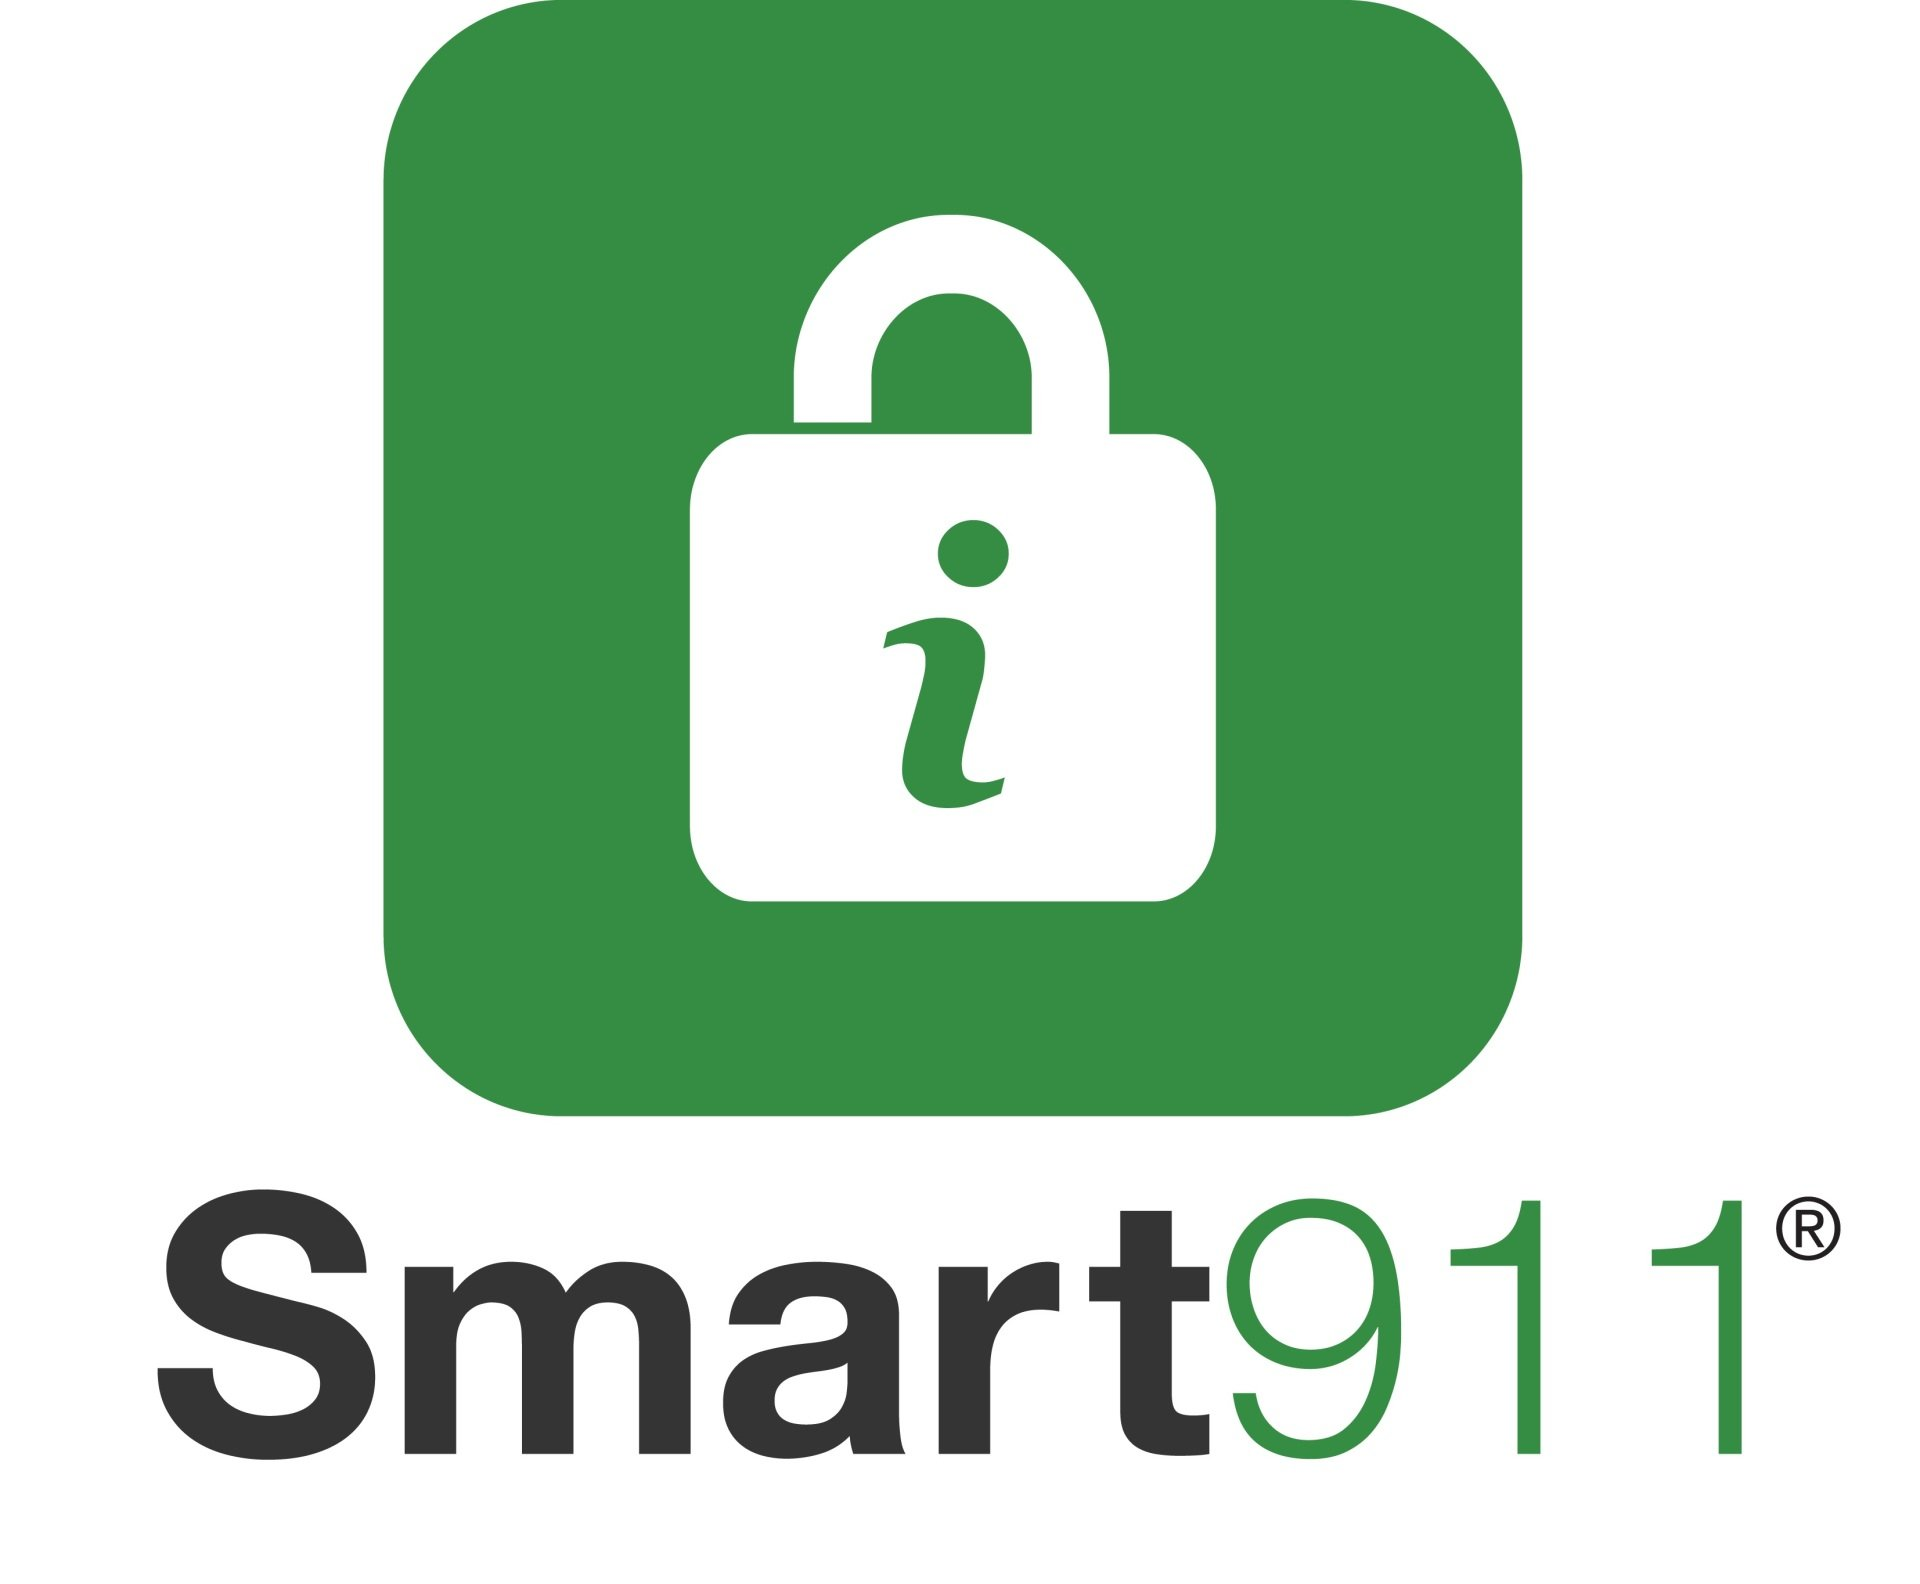 smart911 app logo